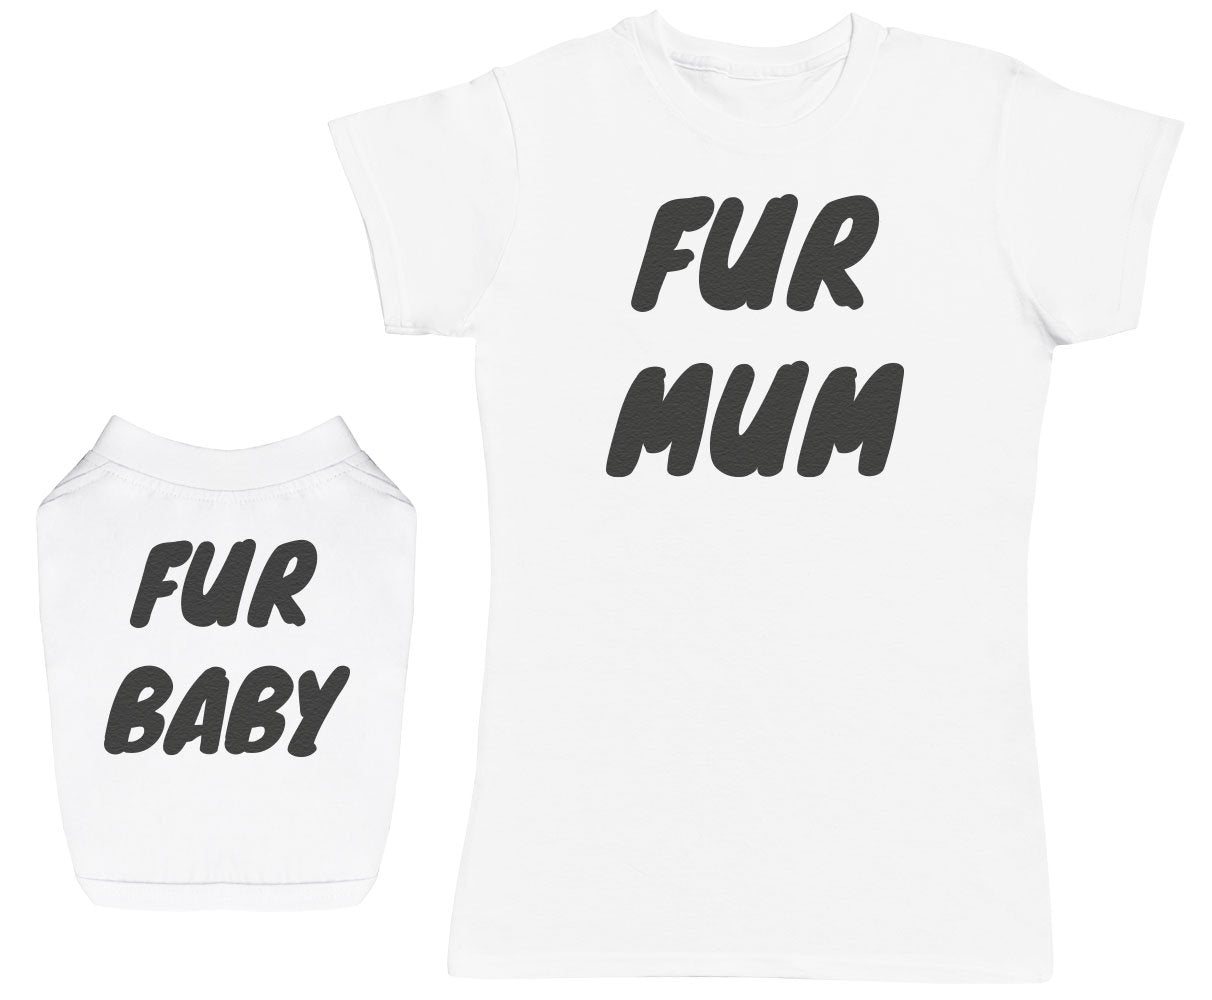 Fur Mum & Fur Baby - Dog T-Shirt And Mens/Womens T-Shirt Set - (Sold Separately)